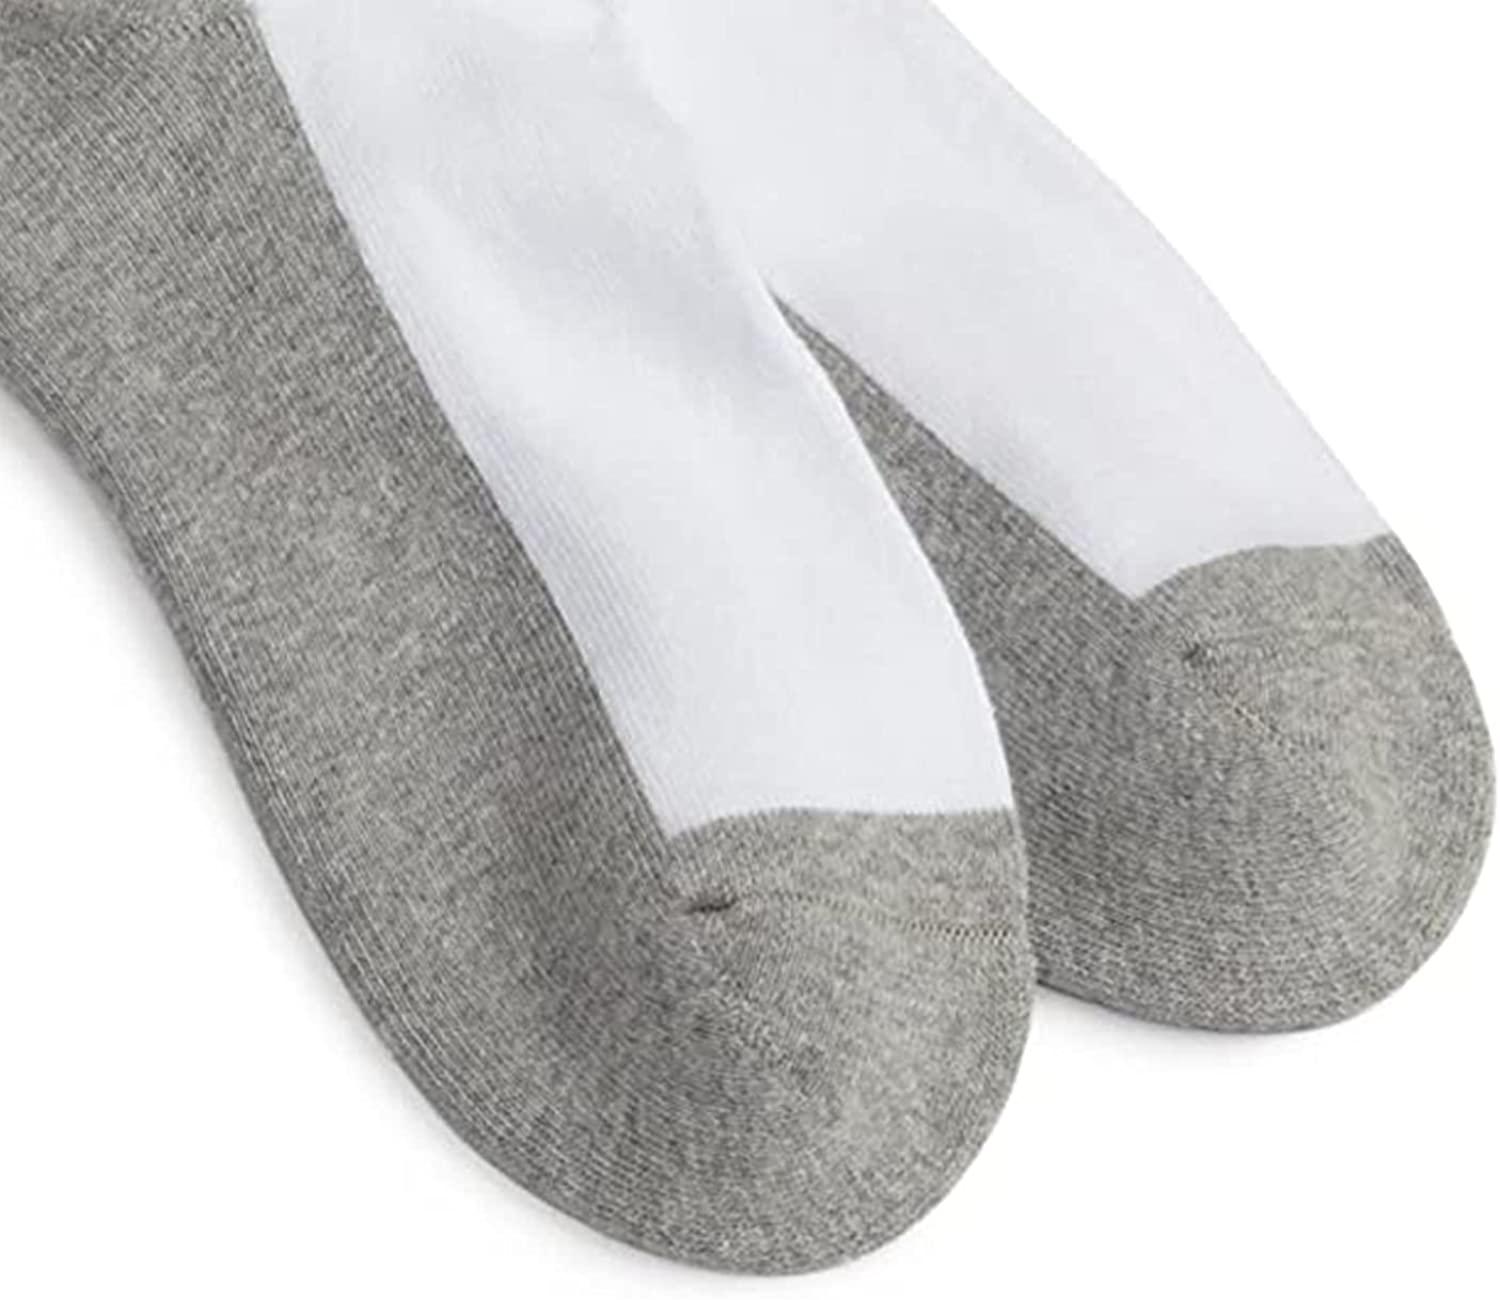 Jefferies Socks Seamless Half Cushion Sport Quarter Socks 6 Pair Pack